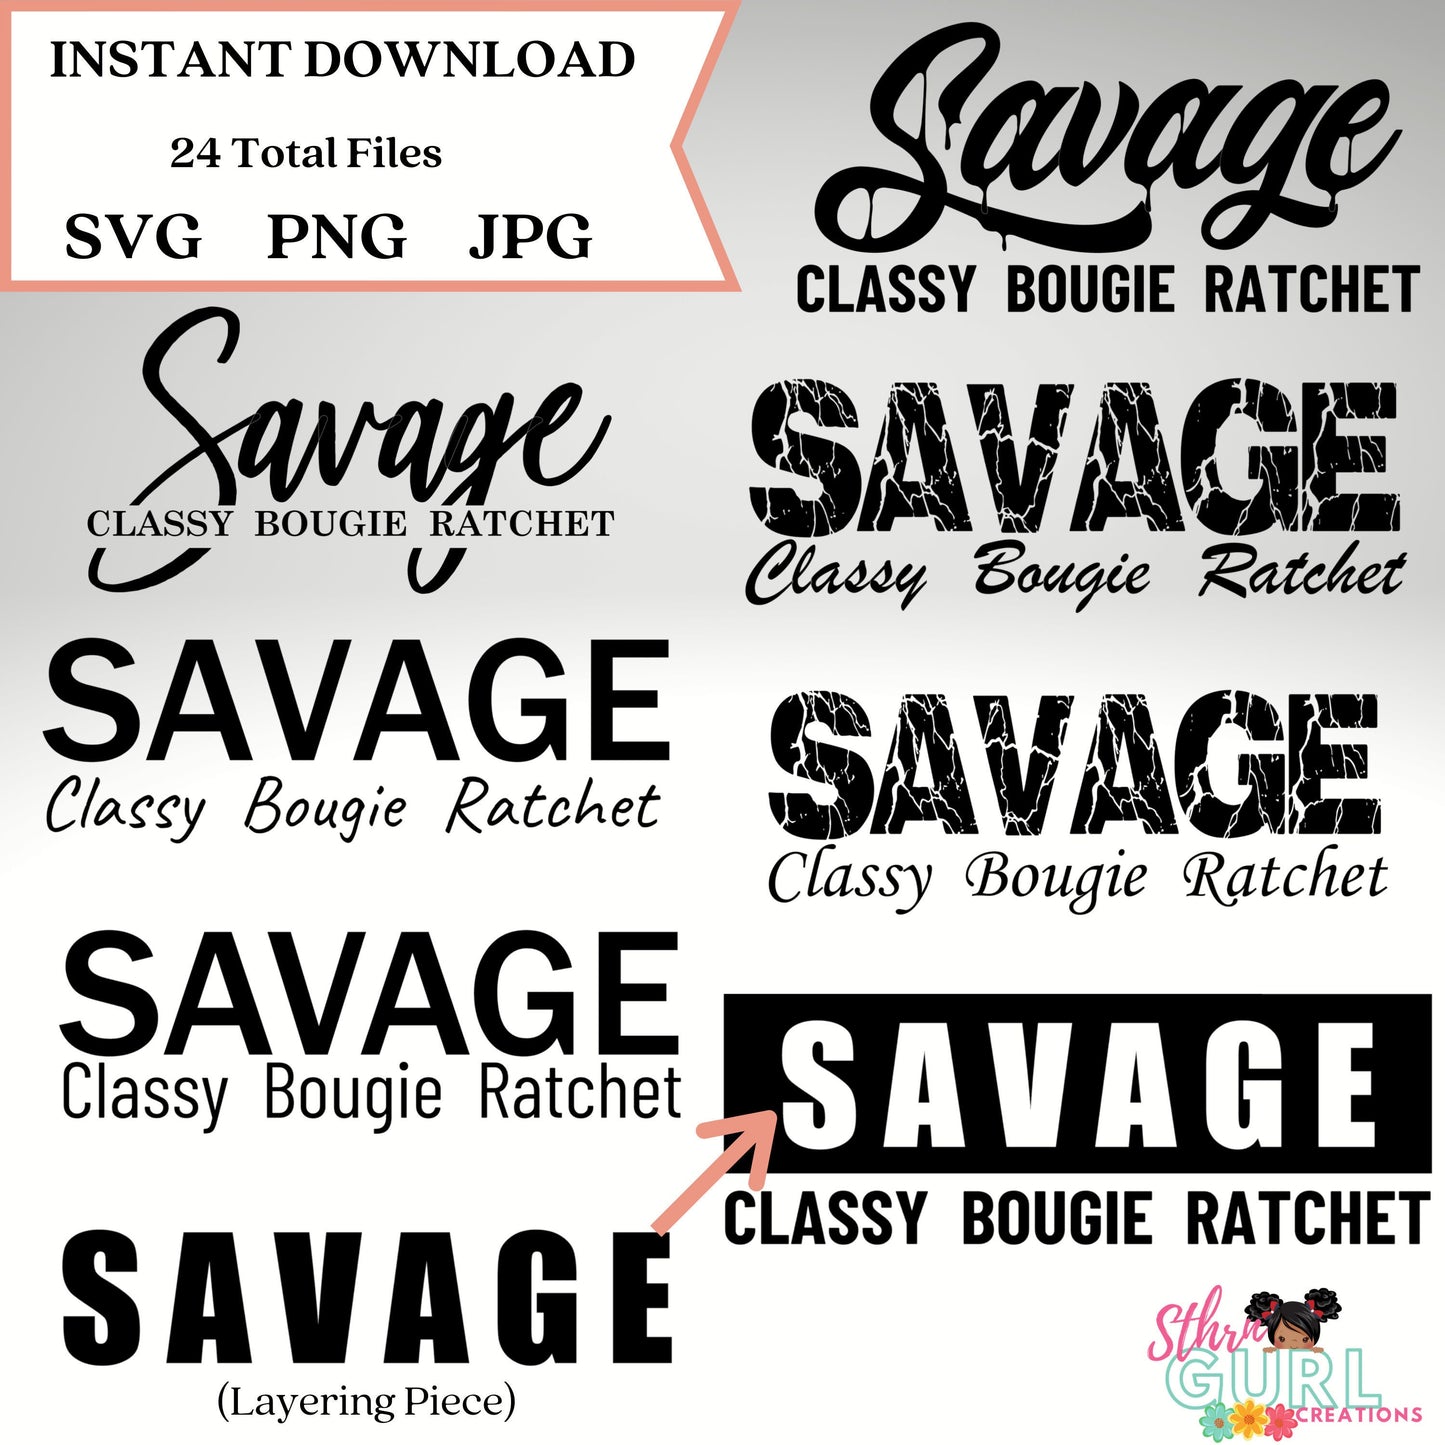 Savage Classy Bougie Ratchet SVG Bundle DIY - SthrngurlCreations